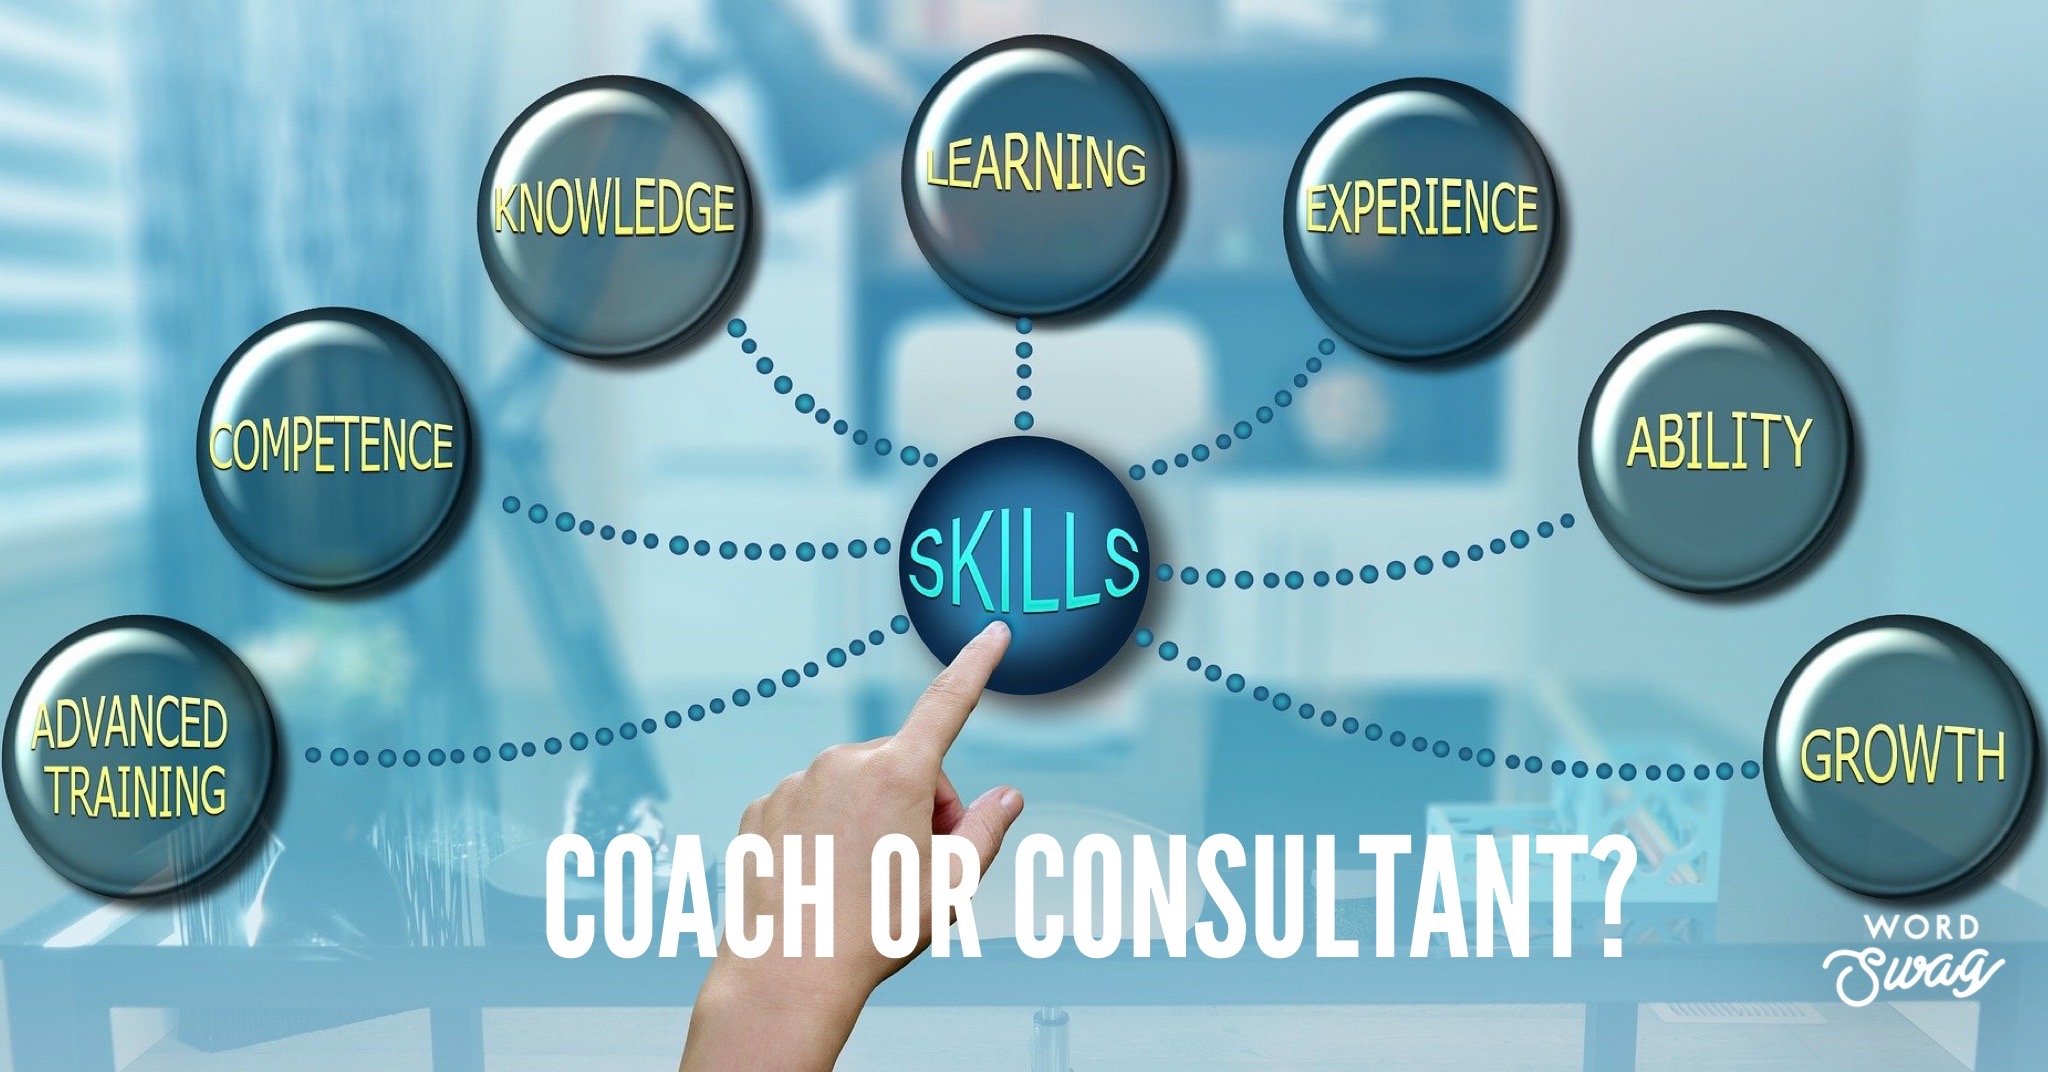 Coach or Consultant?